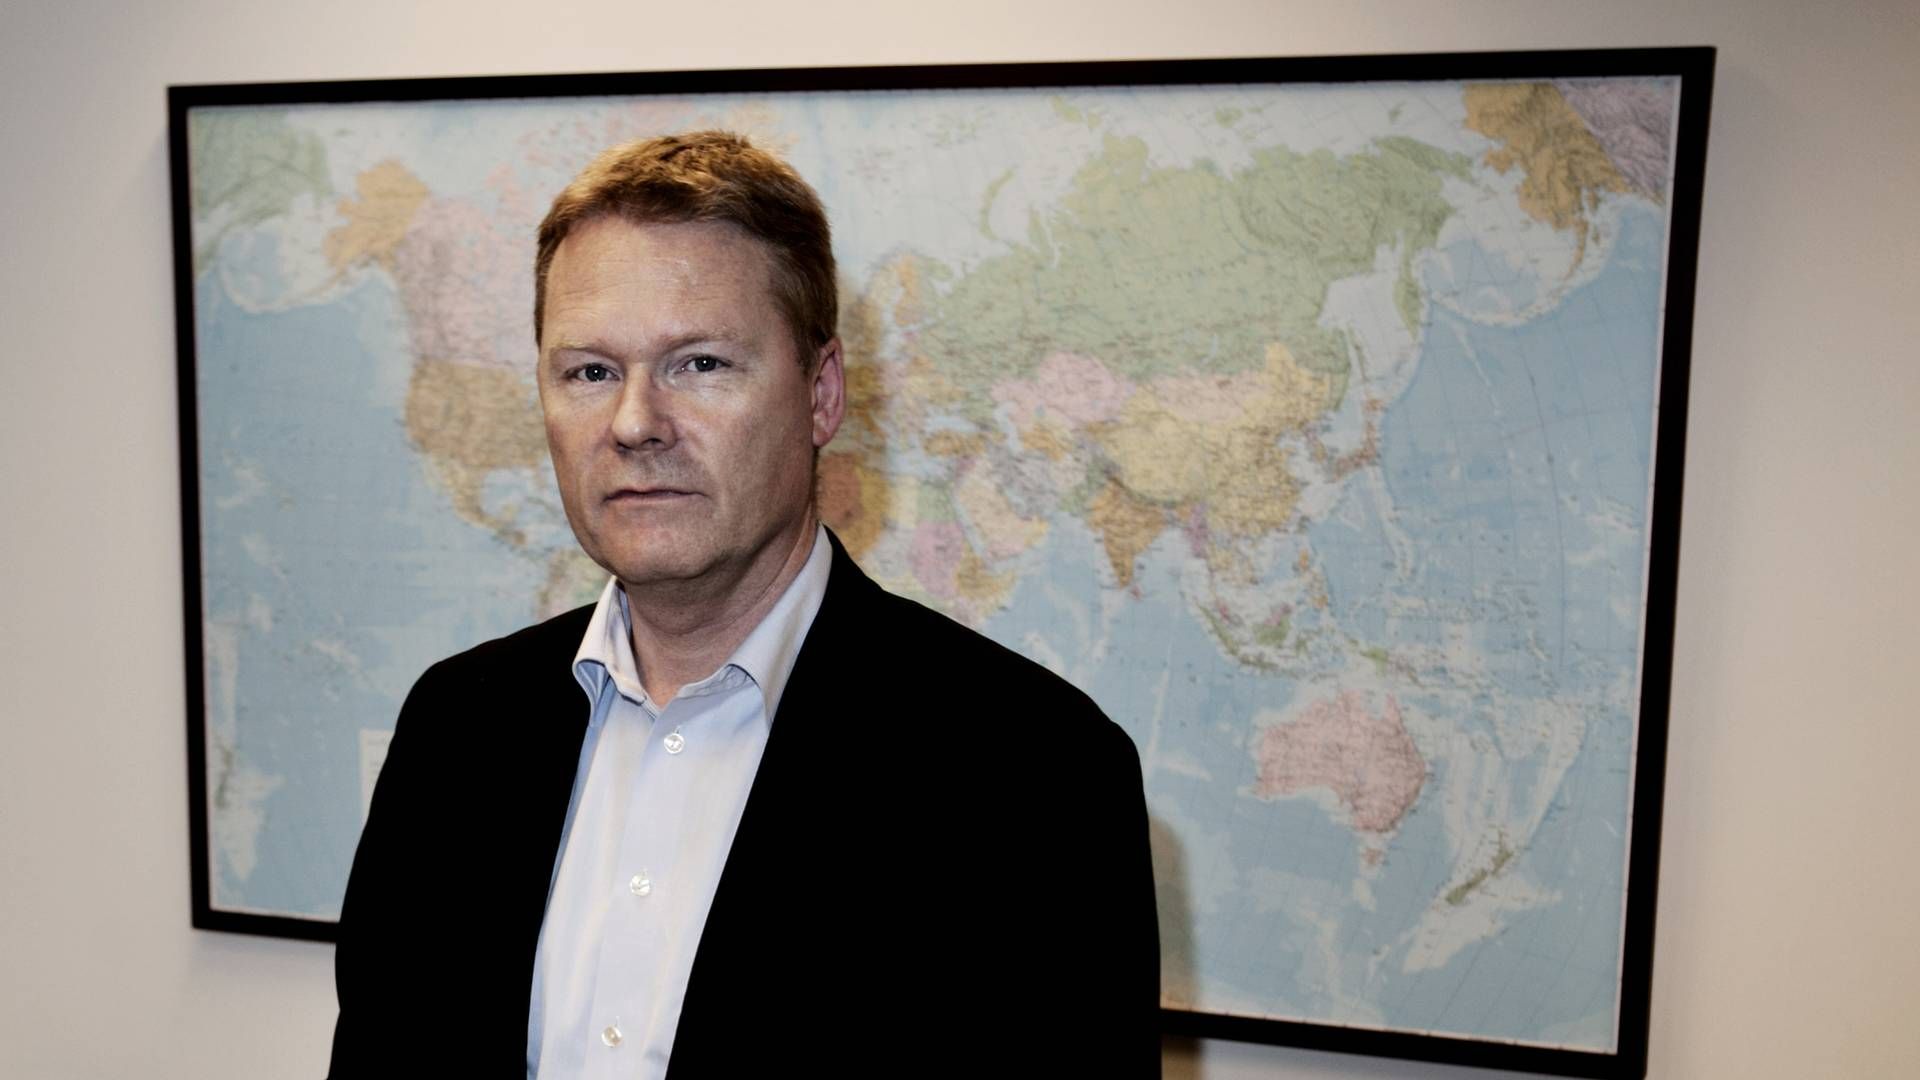 KIm Jørgensen bliver generaldirektør i ECB. | Foto: Gregers Tycho/IND